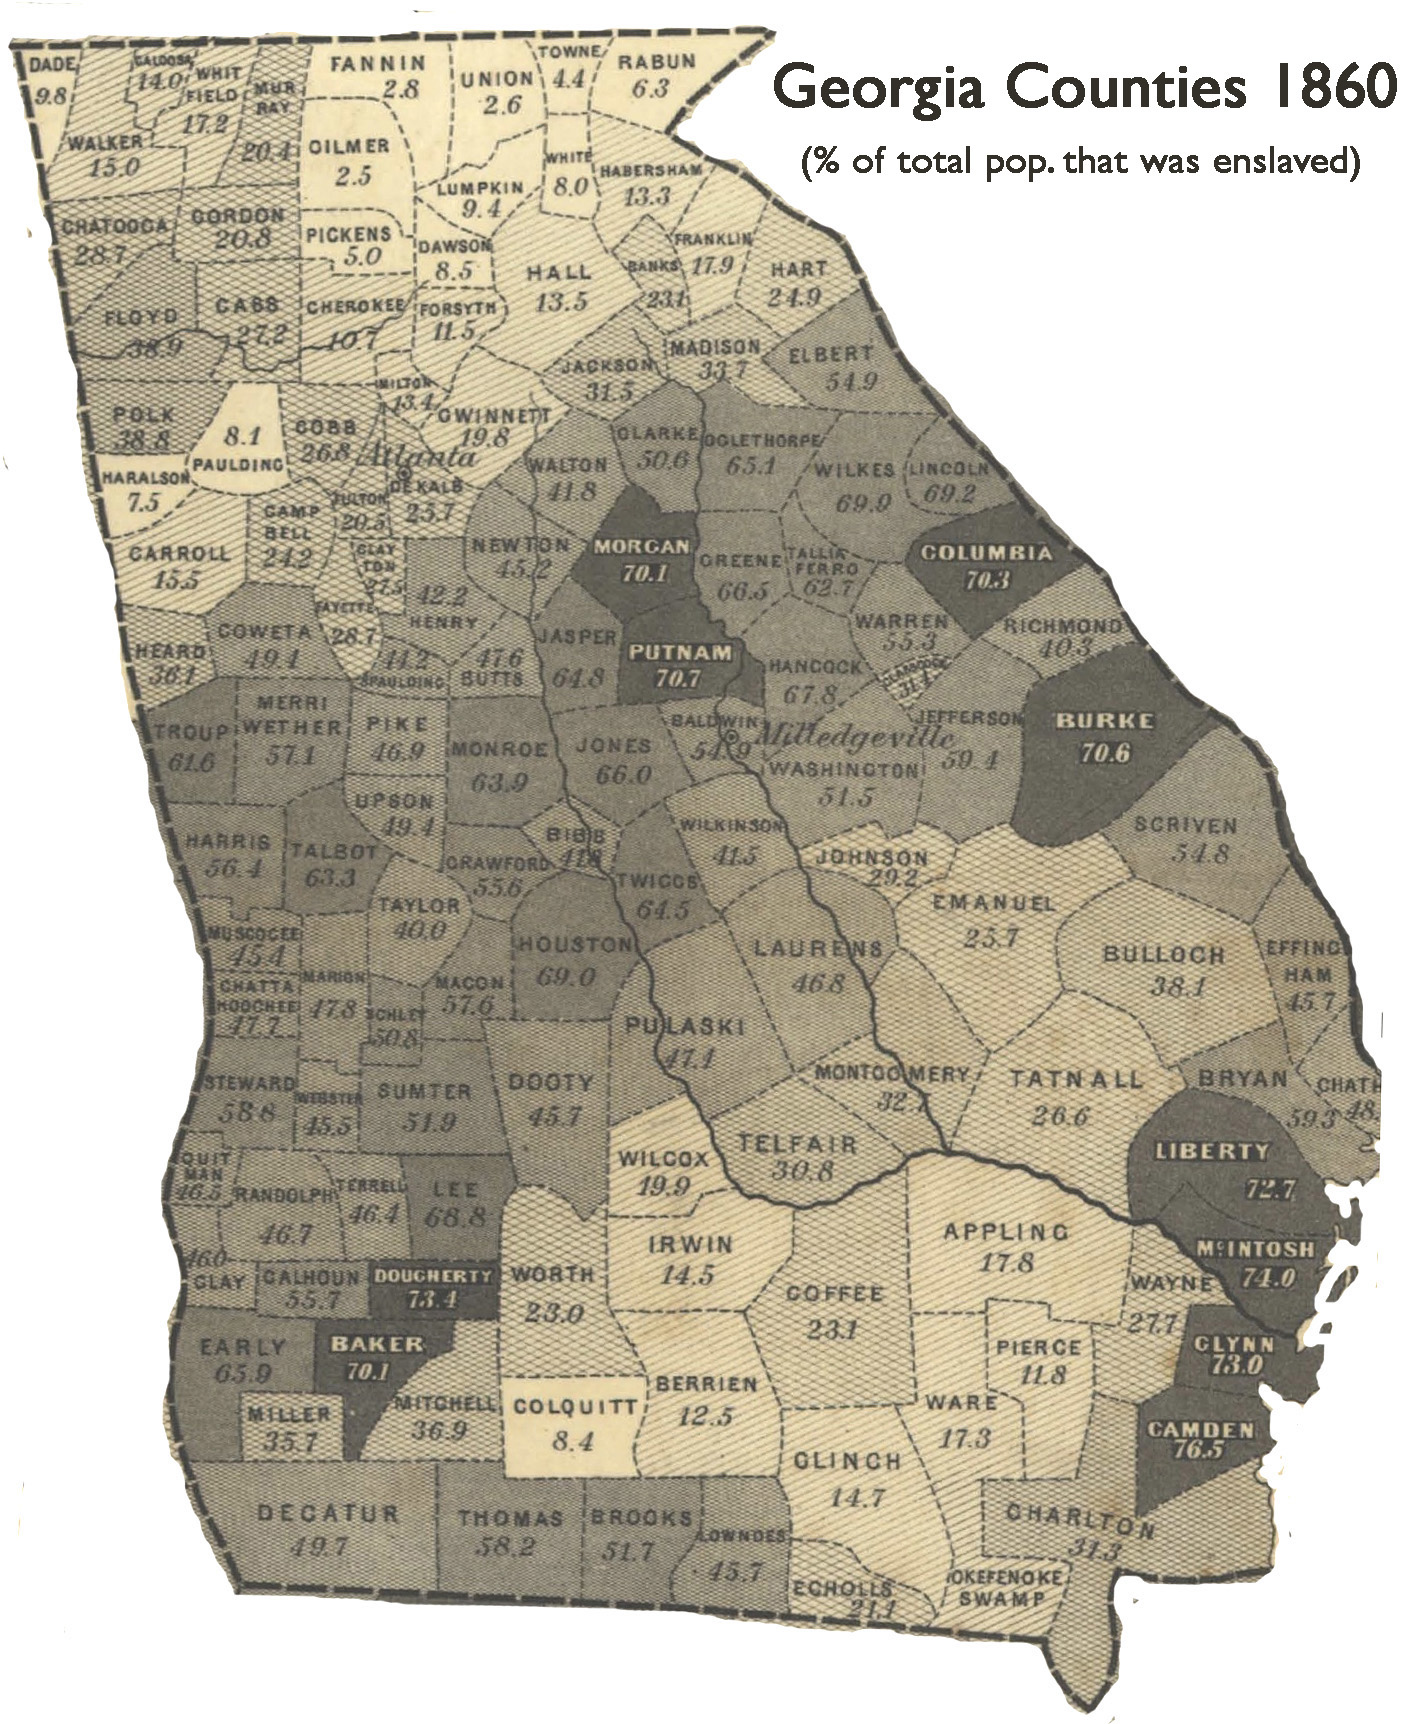 Georgia Counties, 1860